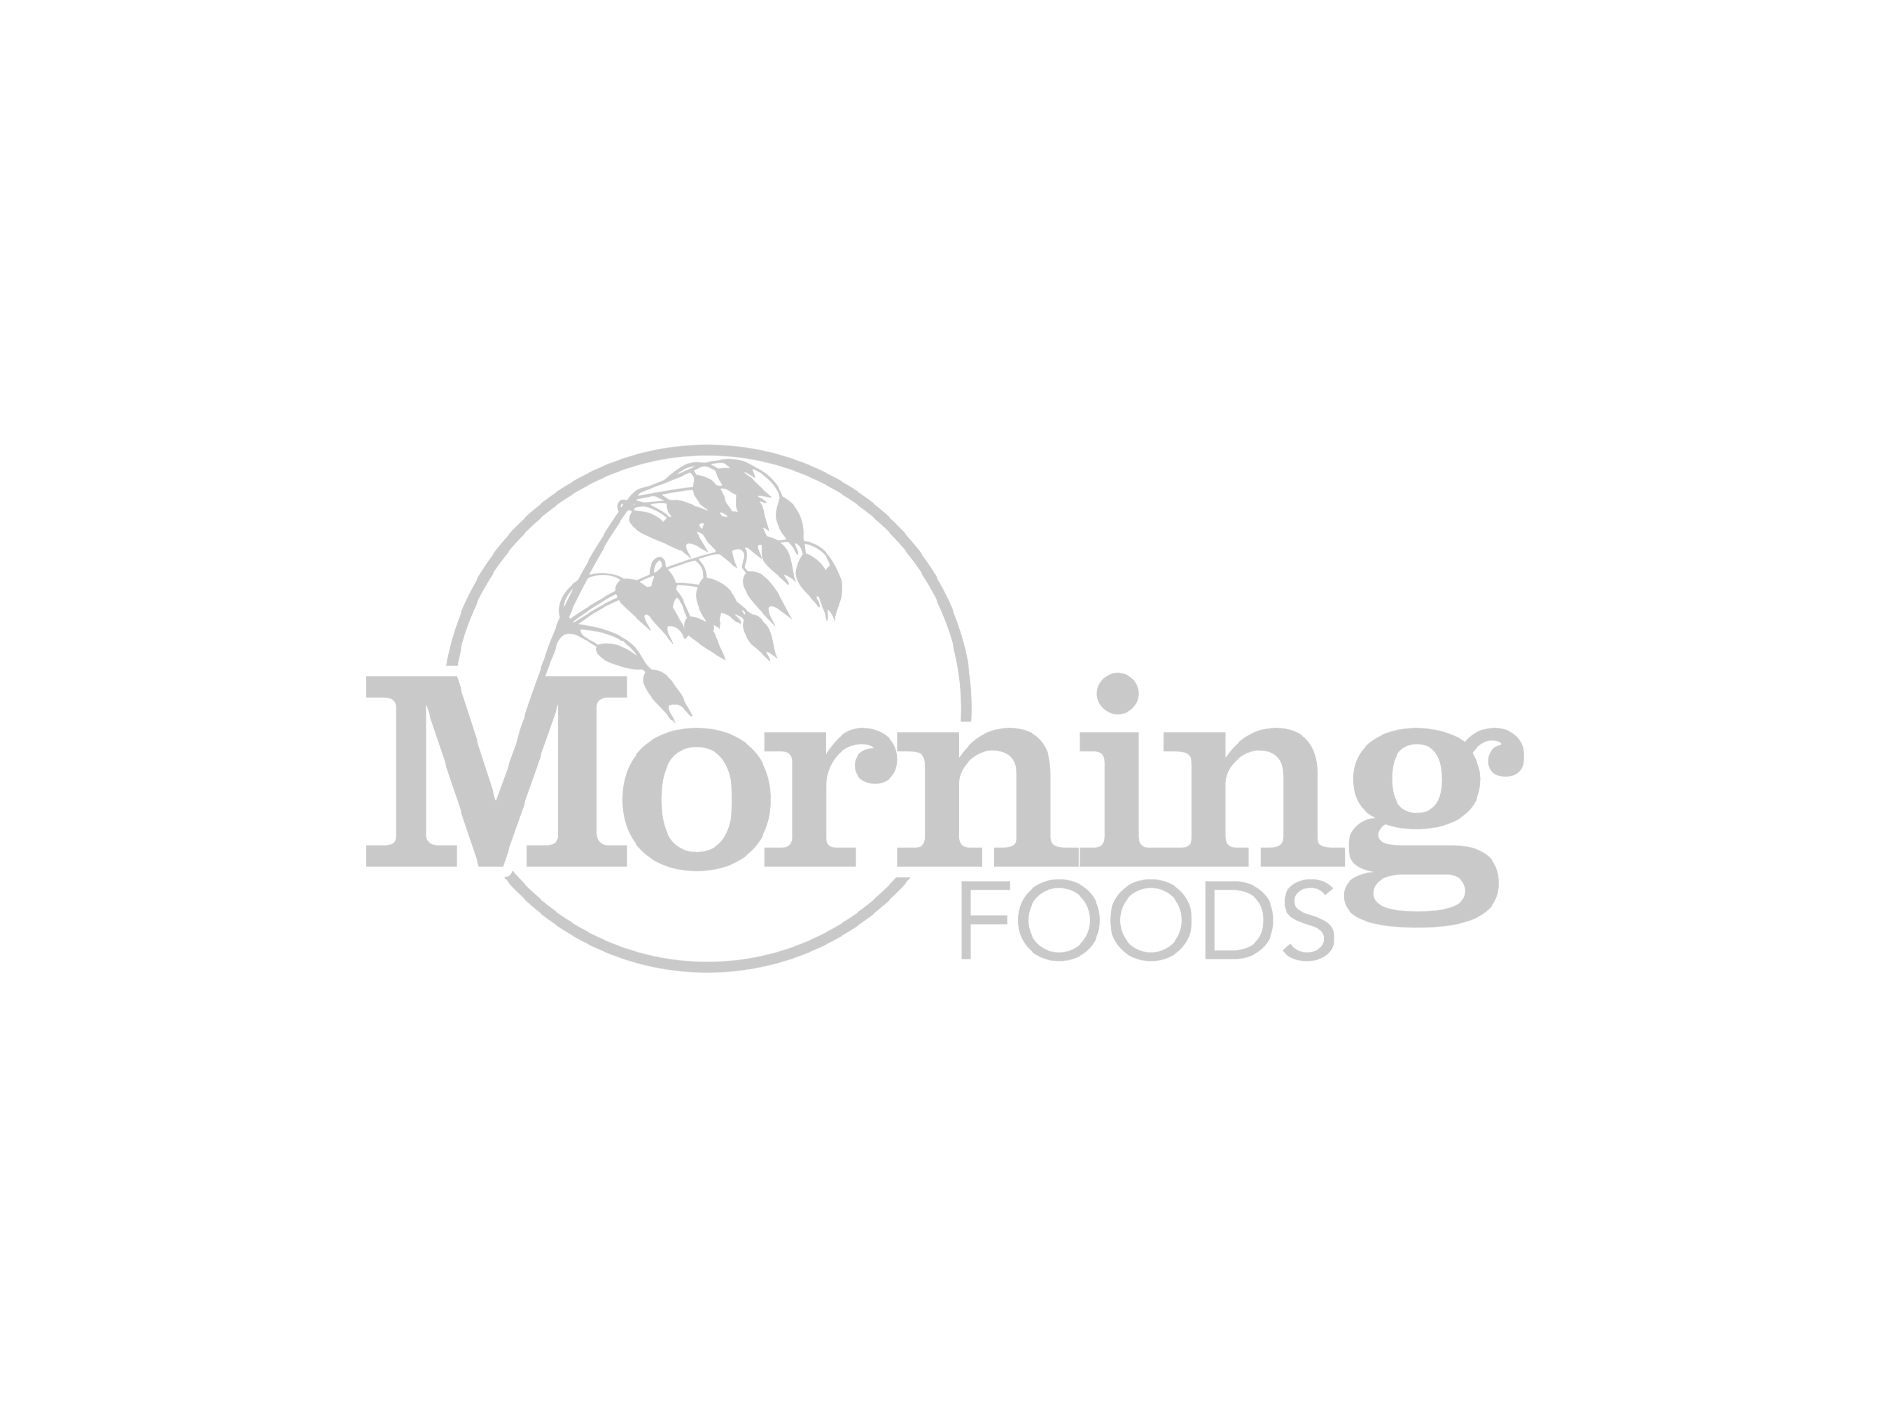 Morning foods grey